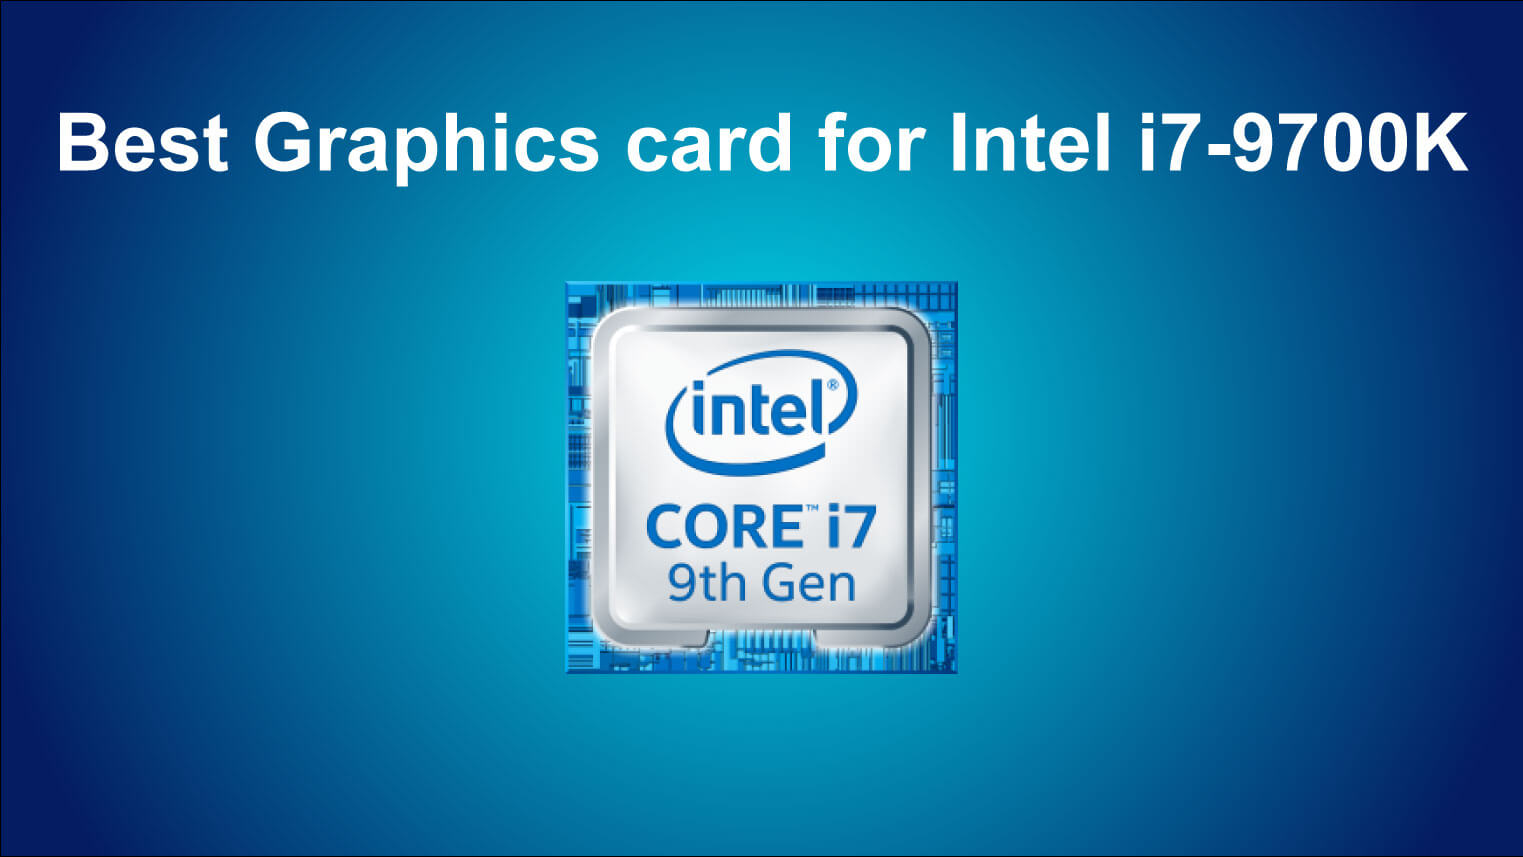 intel graphics cards